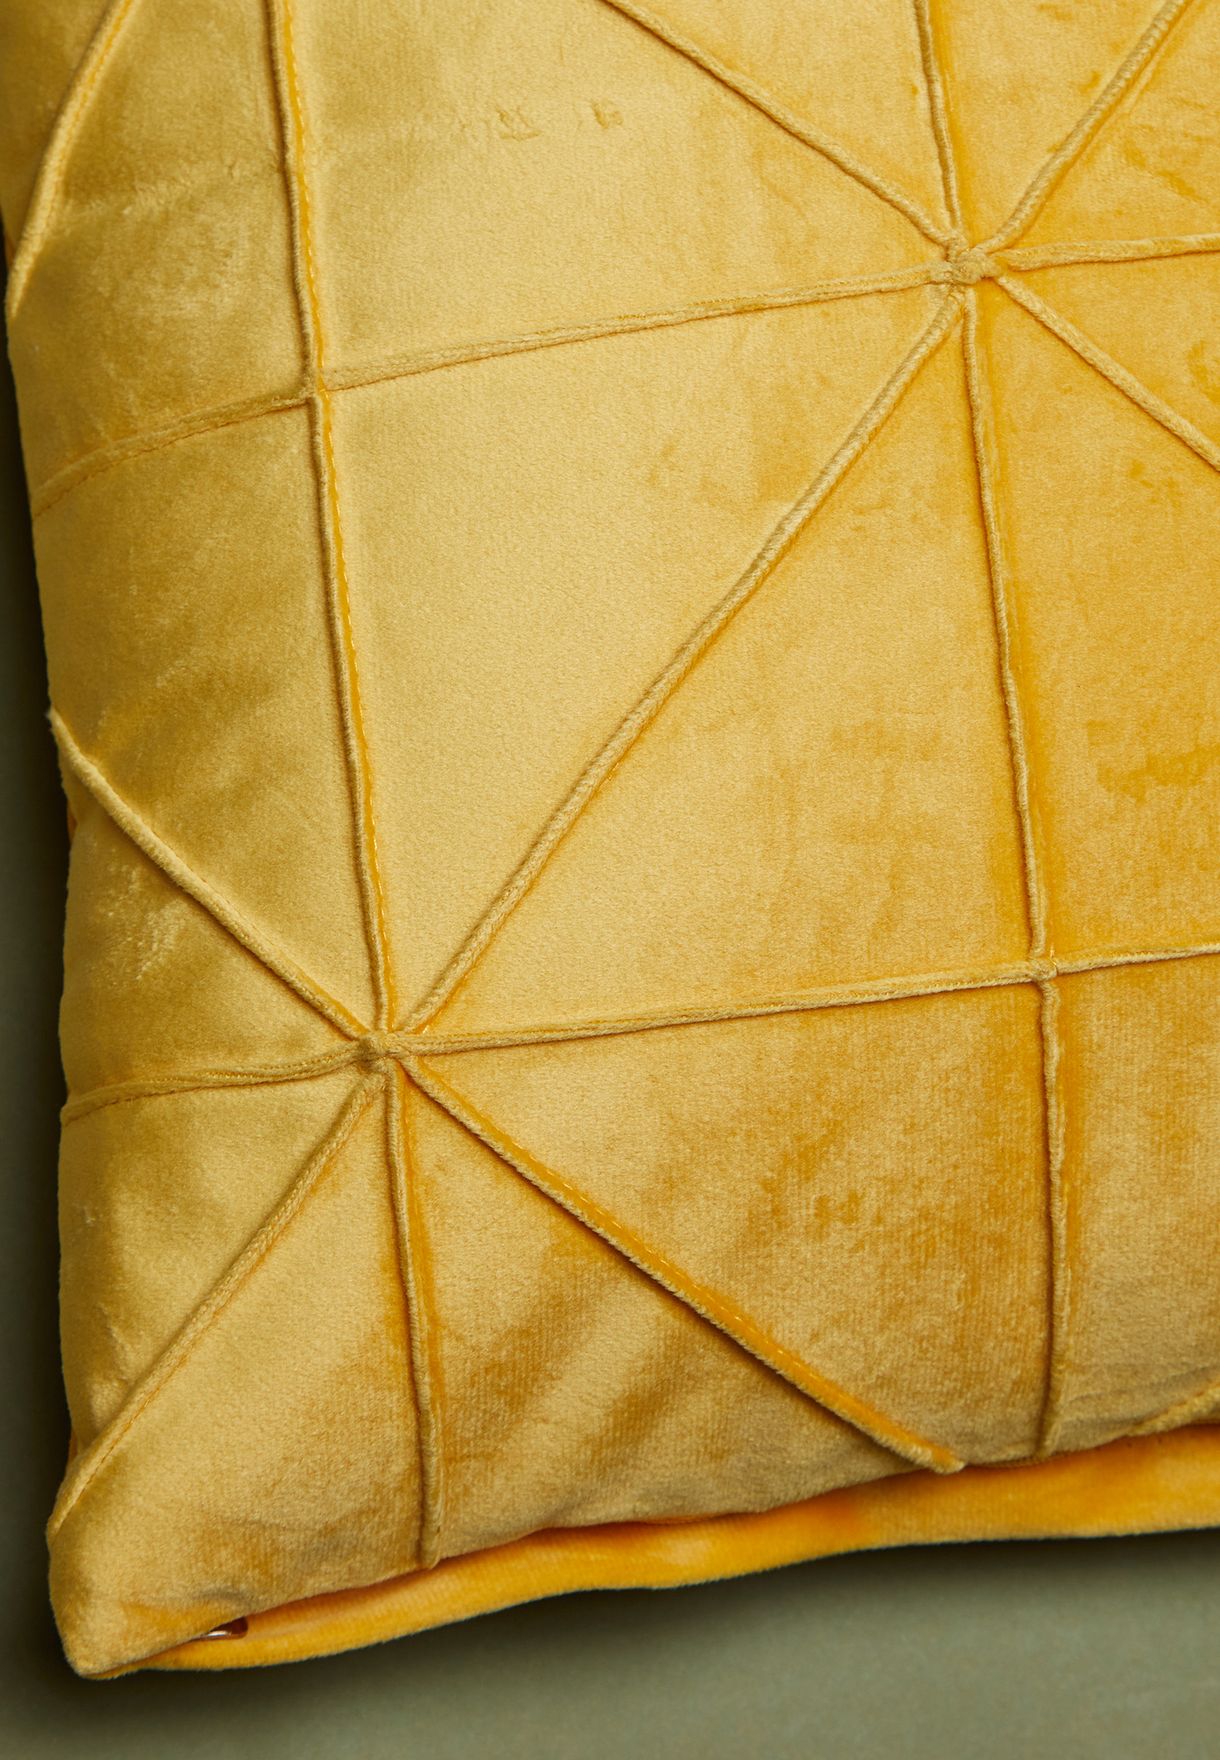 Velour Cushion With Insert 43x43cm